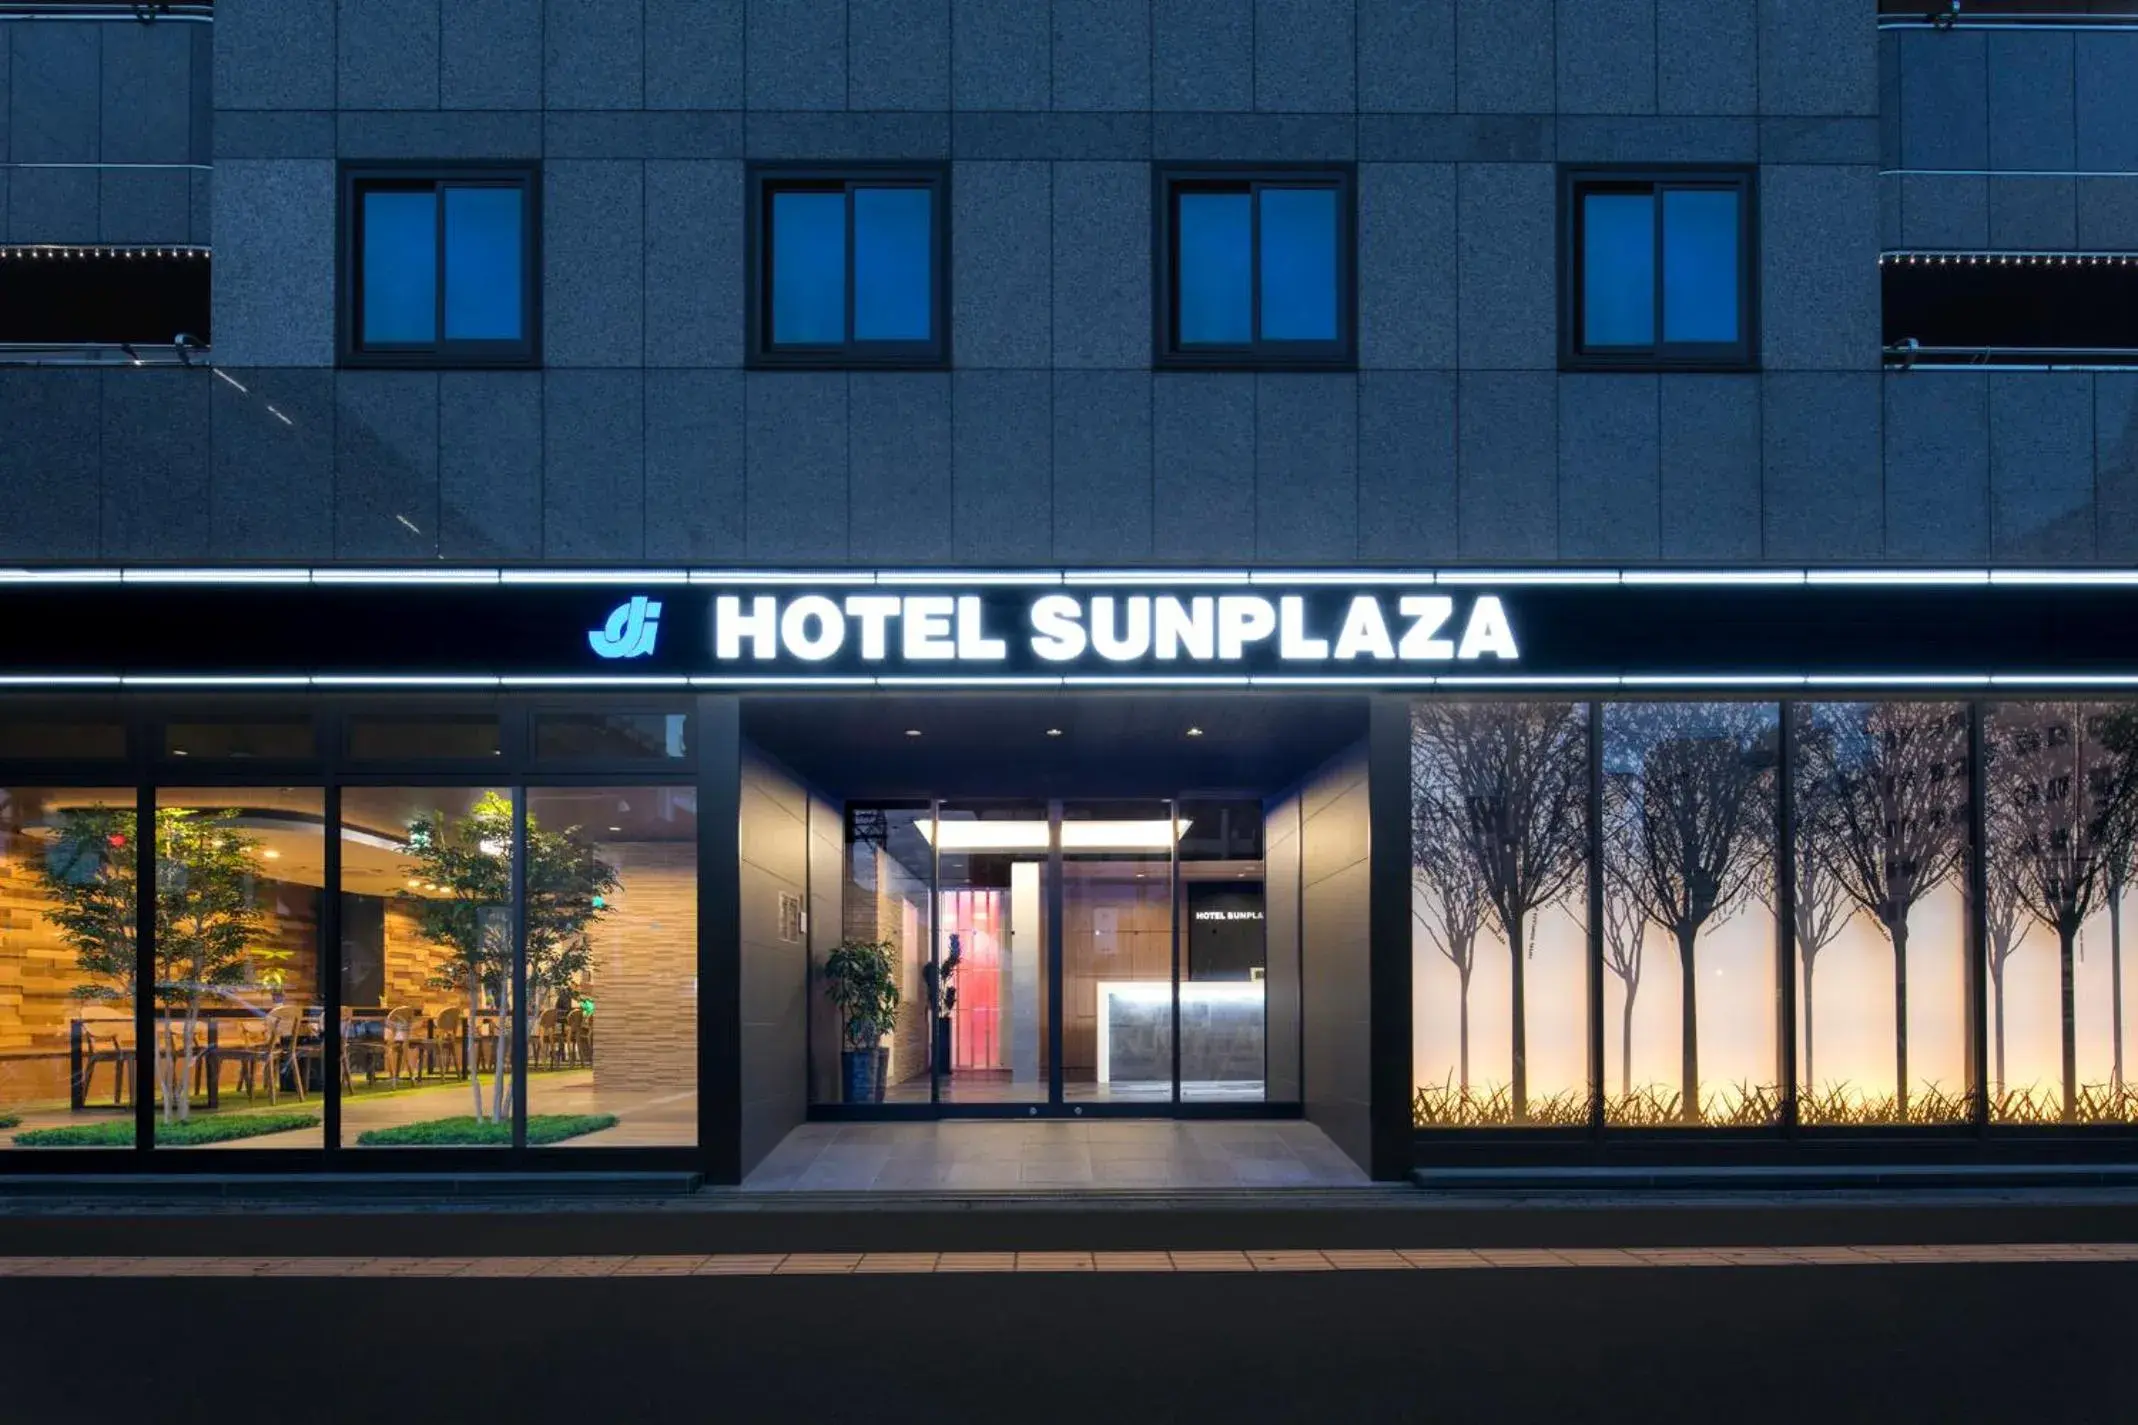 Property logo or sign in Hotel Sunplaza